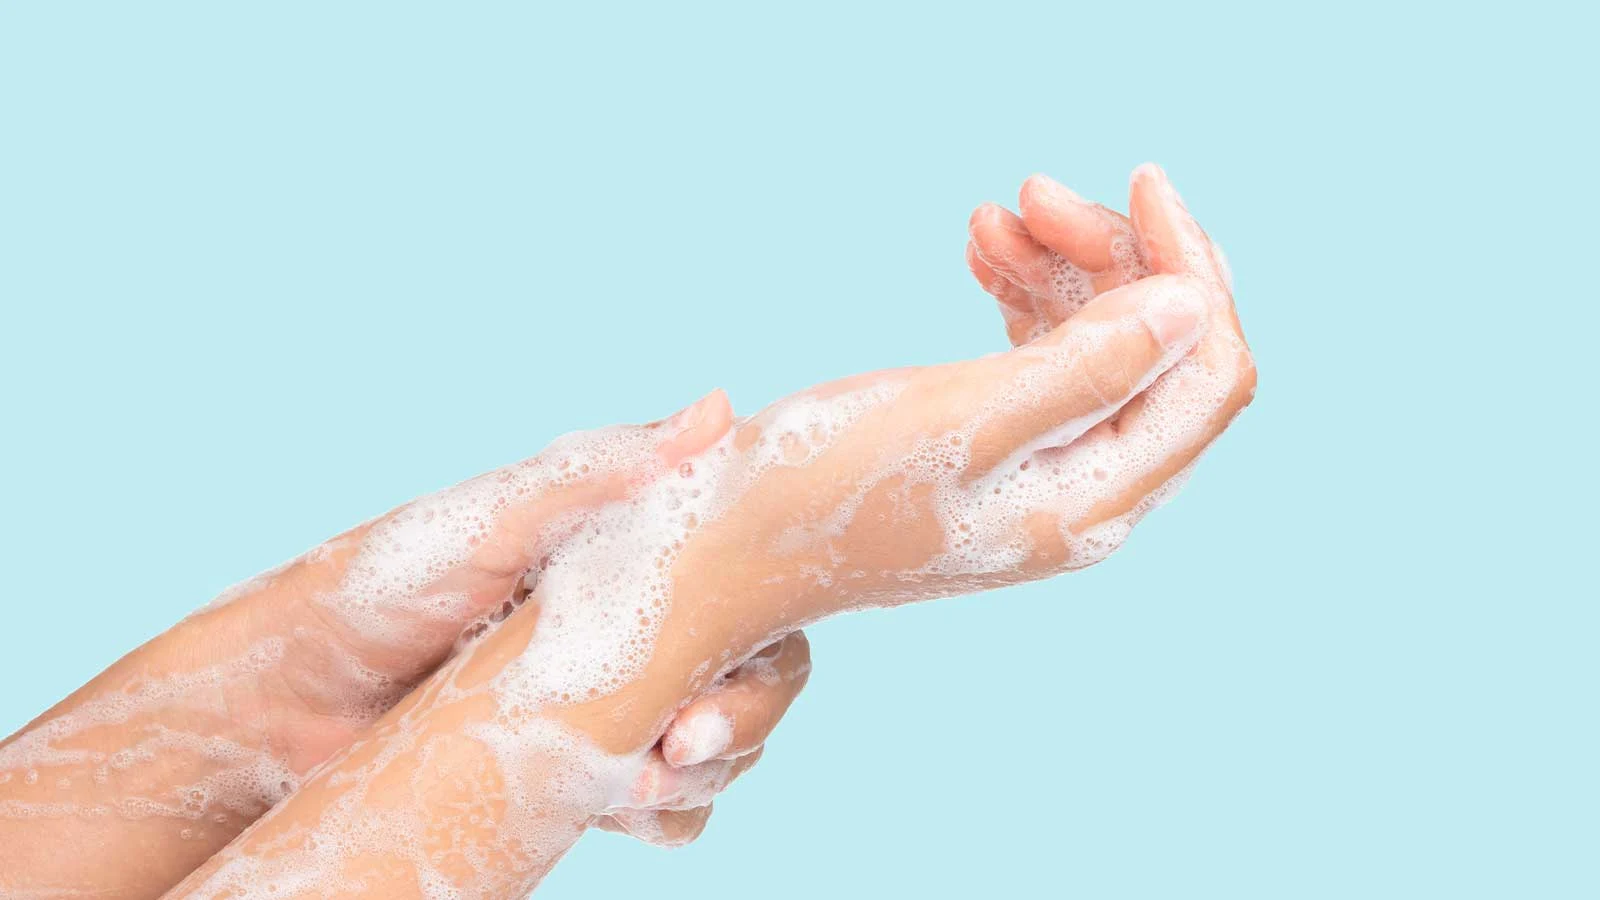 Lavage des bras au savon